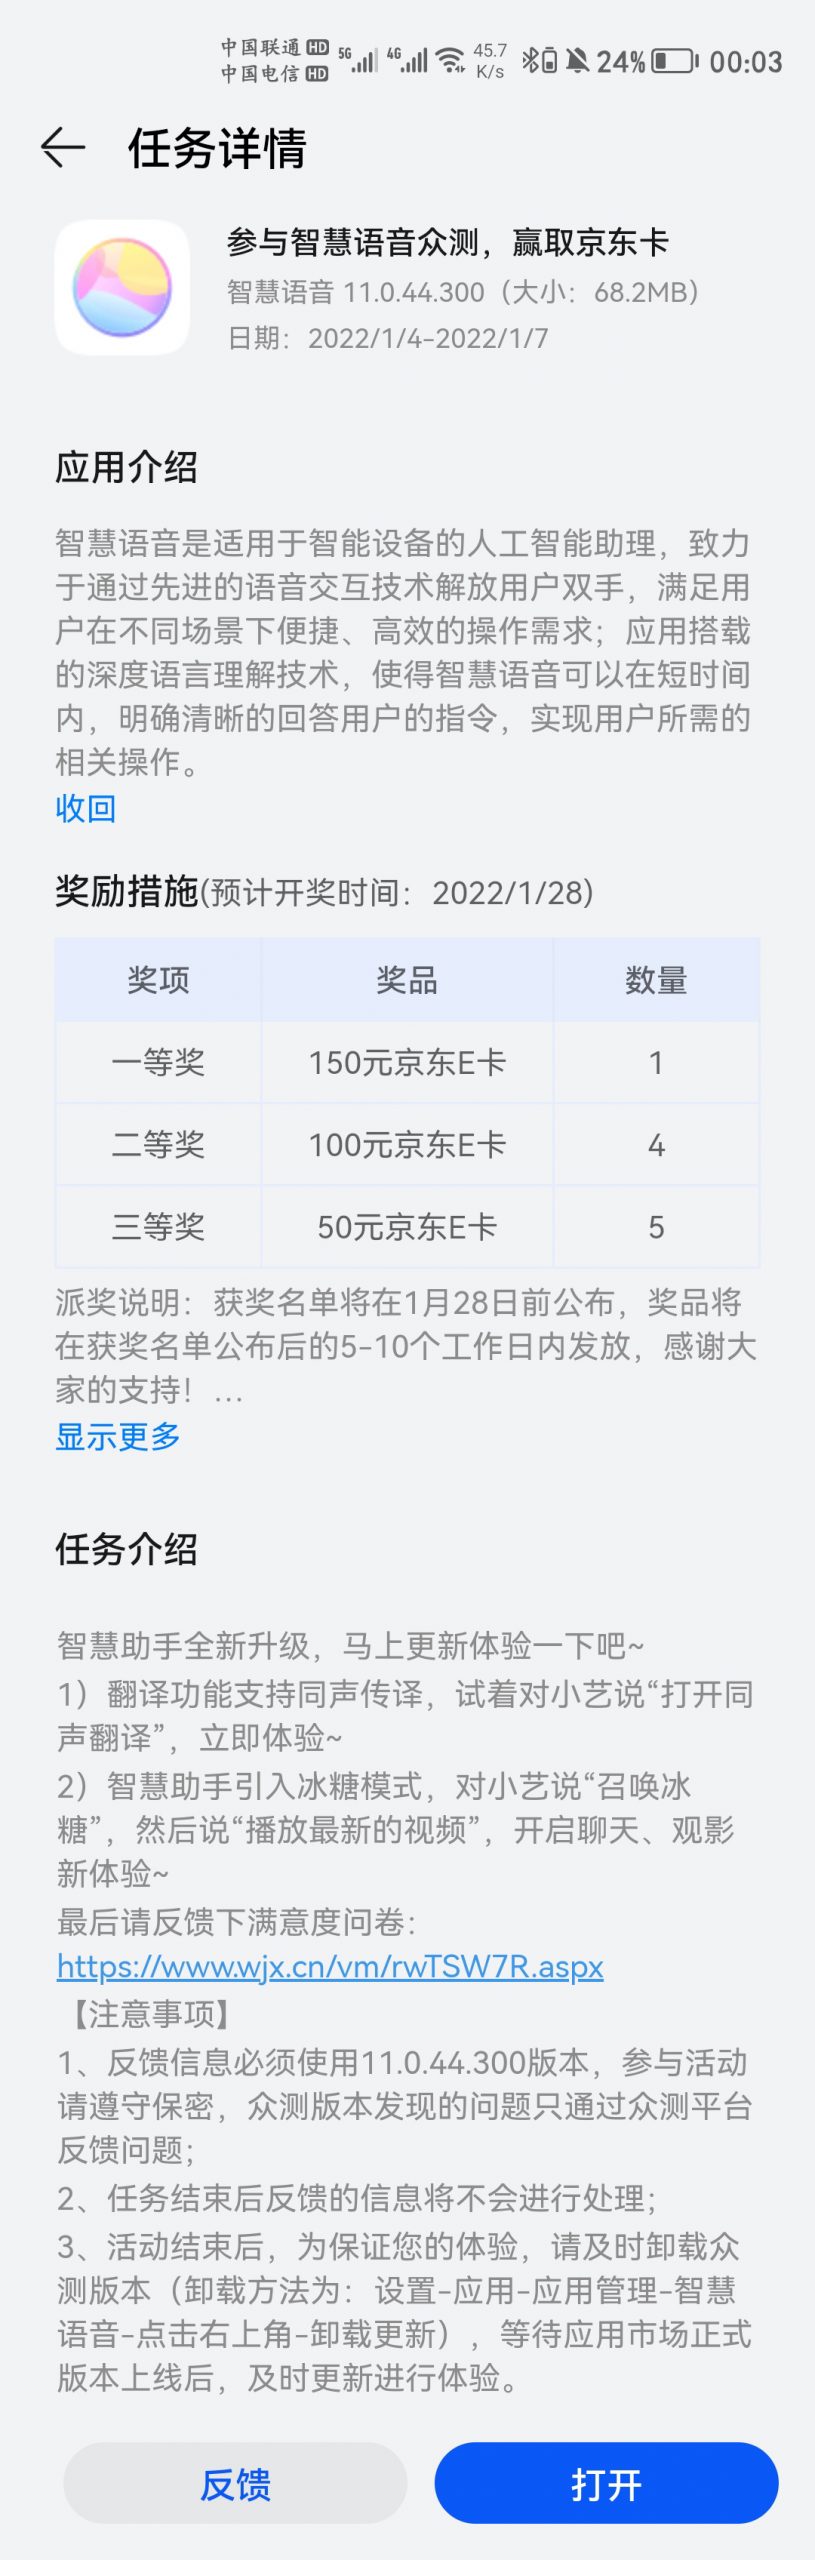 Huawei HarmonyOS smart voice getting the new public beta version 11.0.44.300